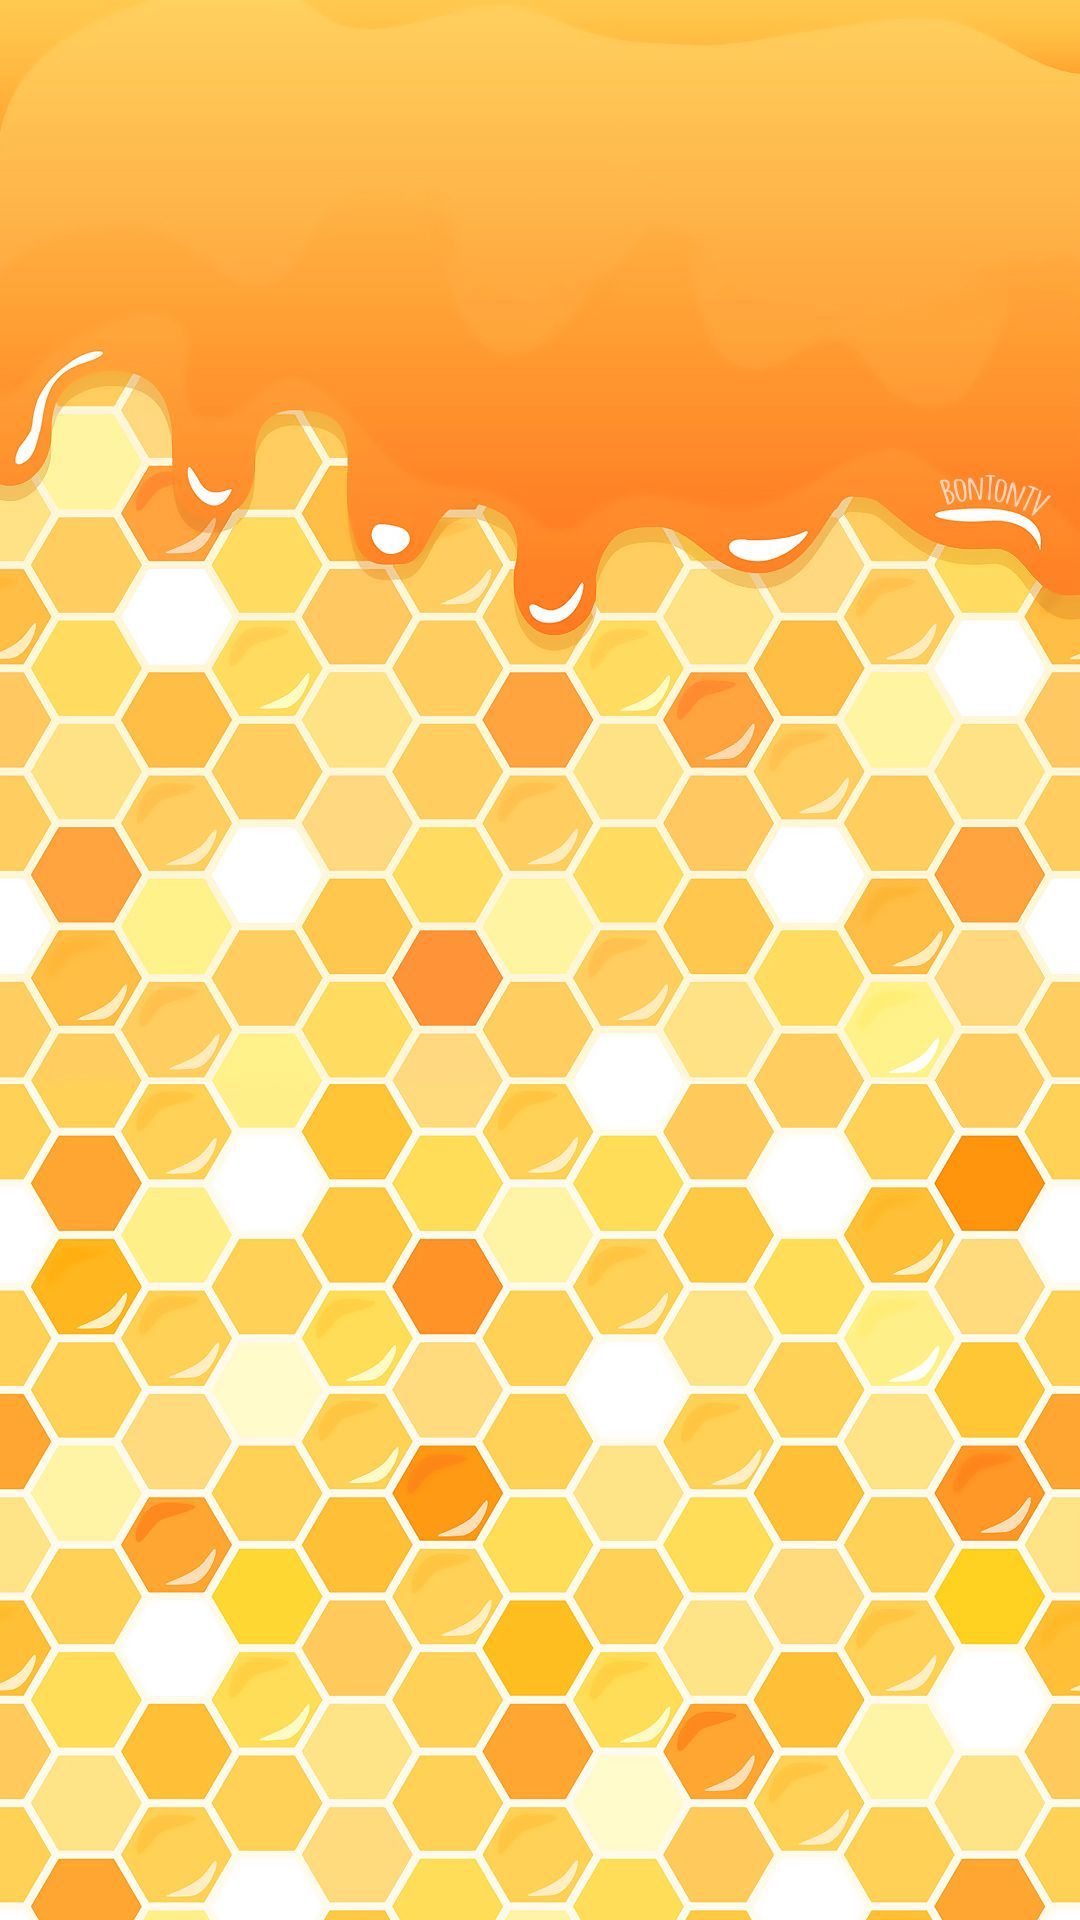 Phone Wallpaper HD Honey BonTon TV Background 1080x1920 wallpaper #wallpap. iPhone wallpaper orange, Cute patterns wallpaper, Space phone wallpaper